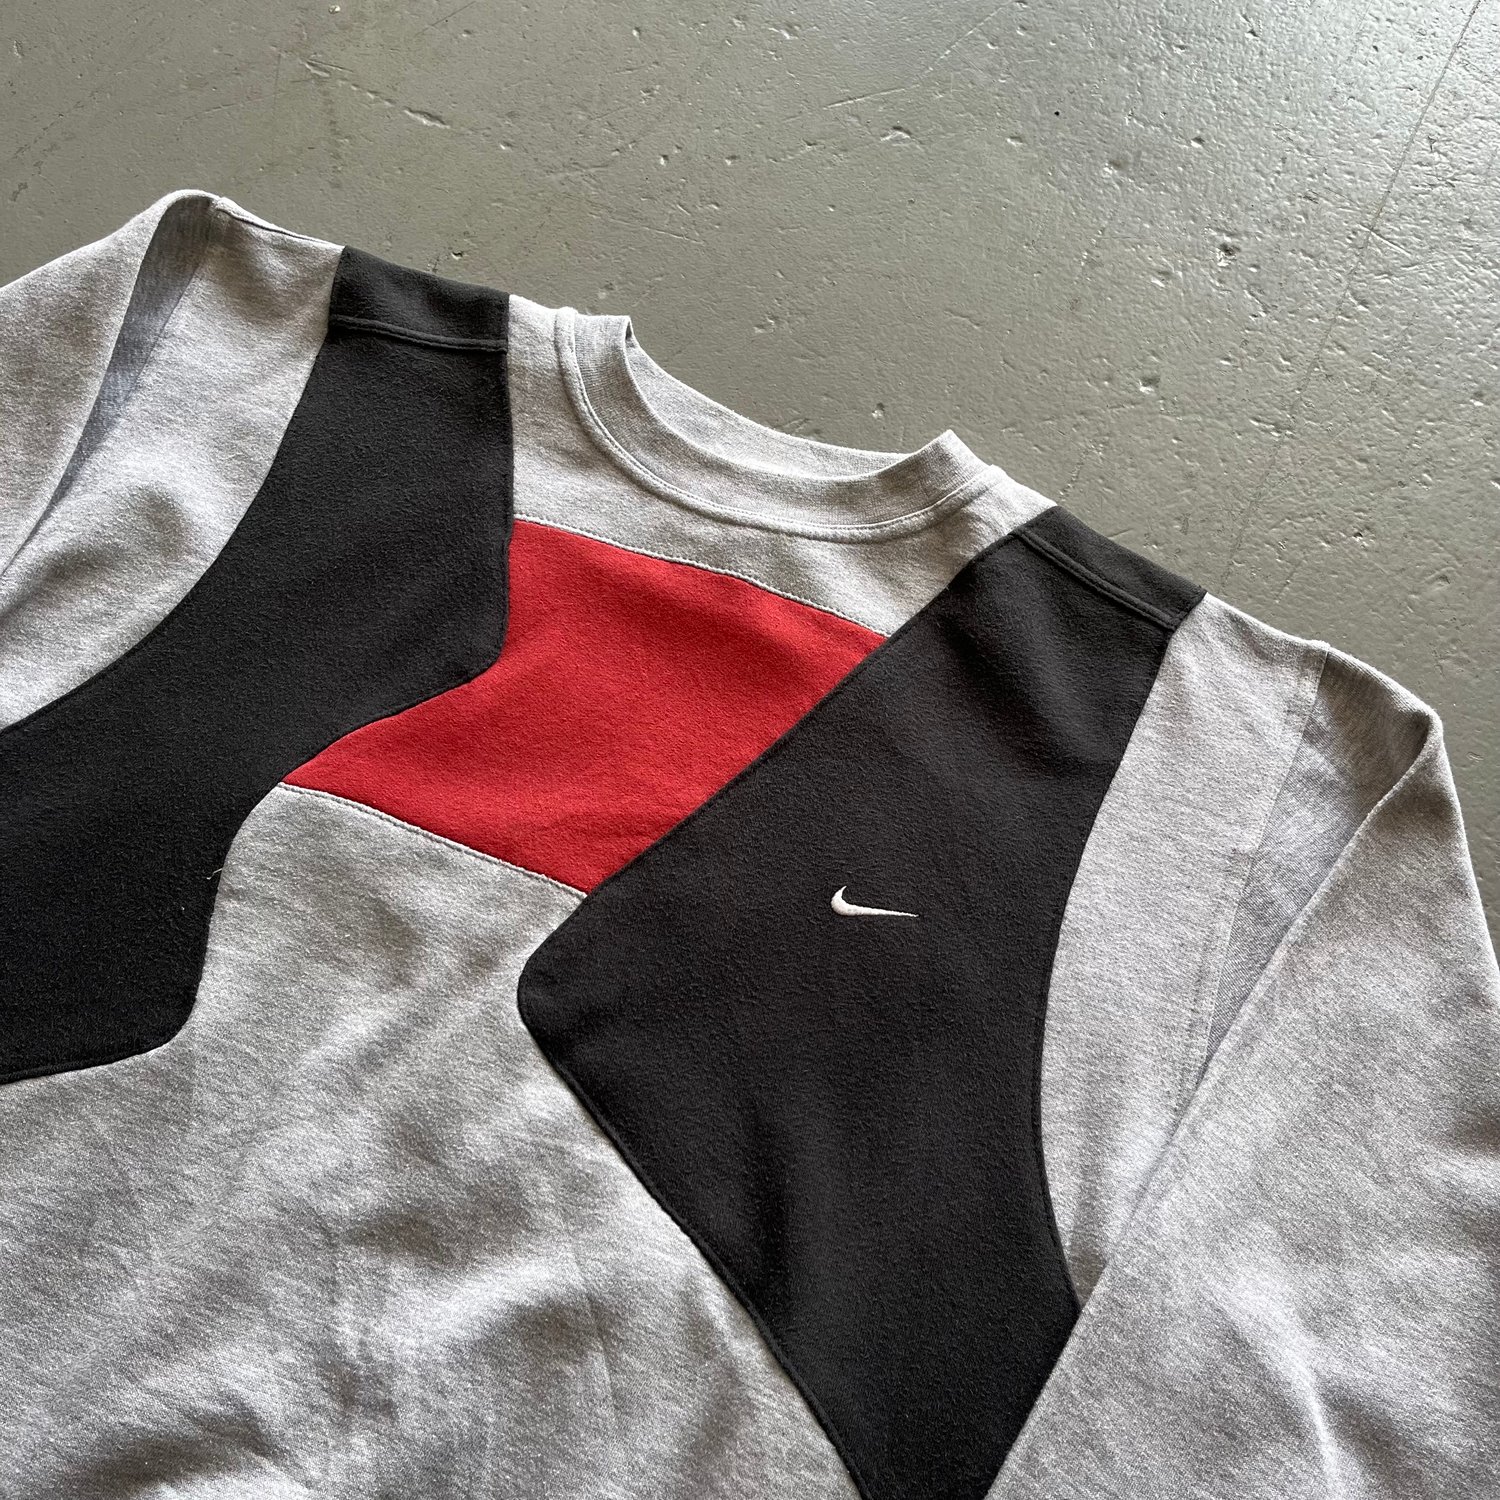 Image of Vintage Nike rework sweatshirt size large grey 